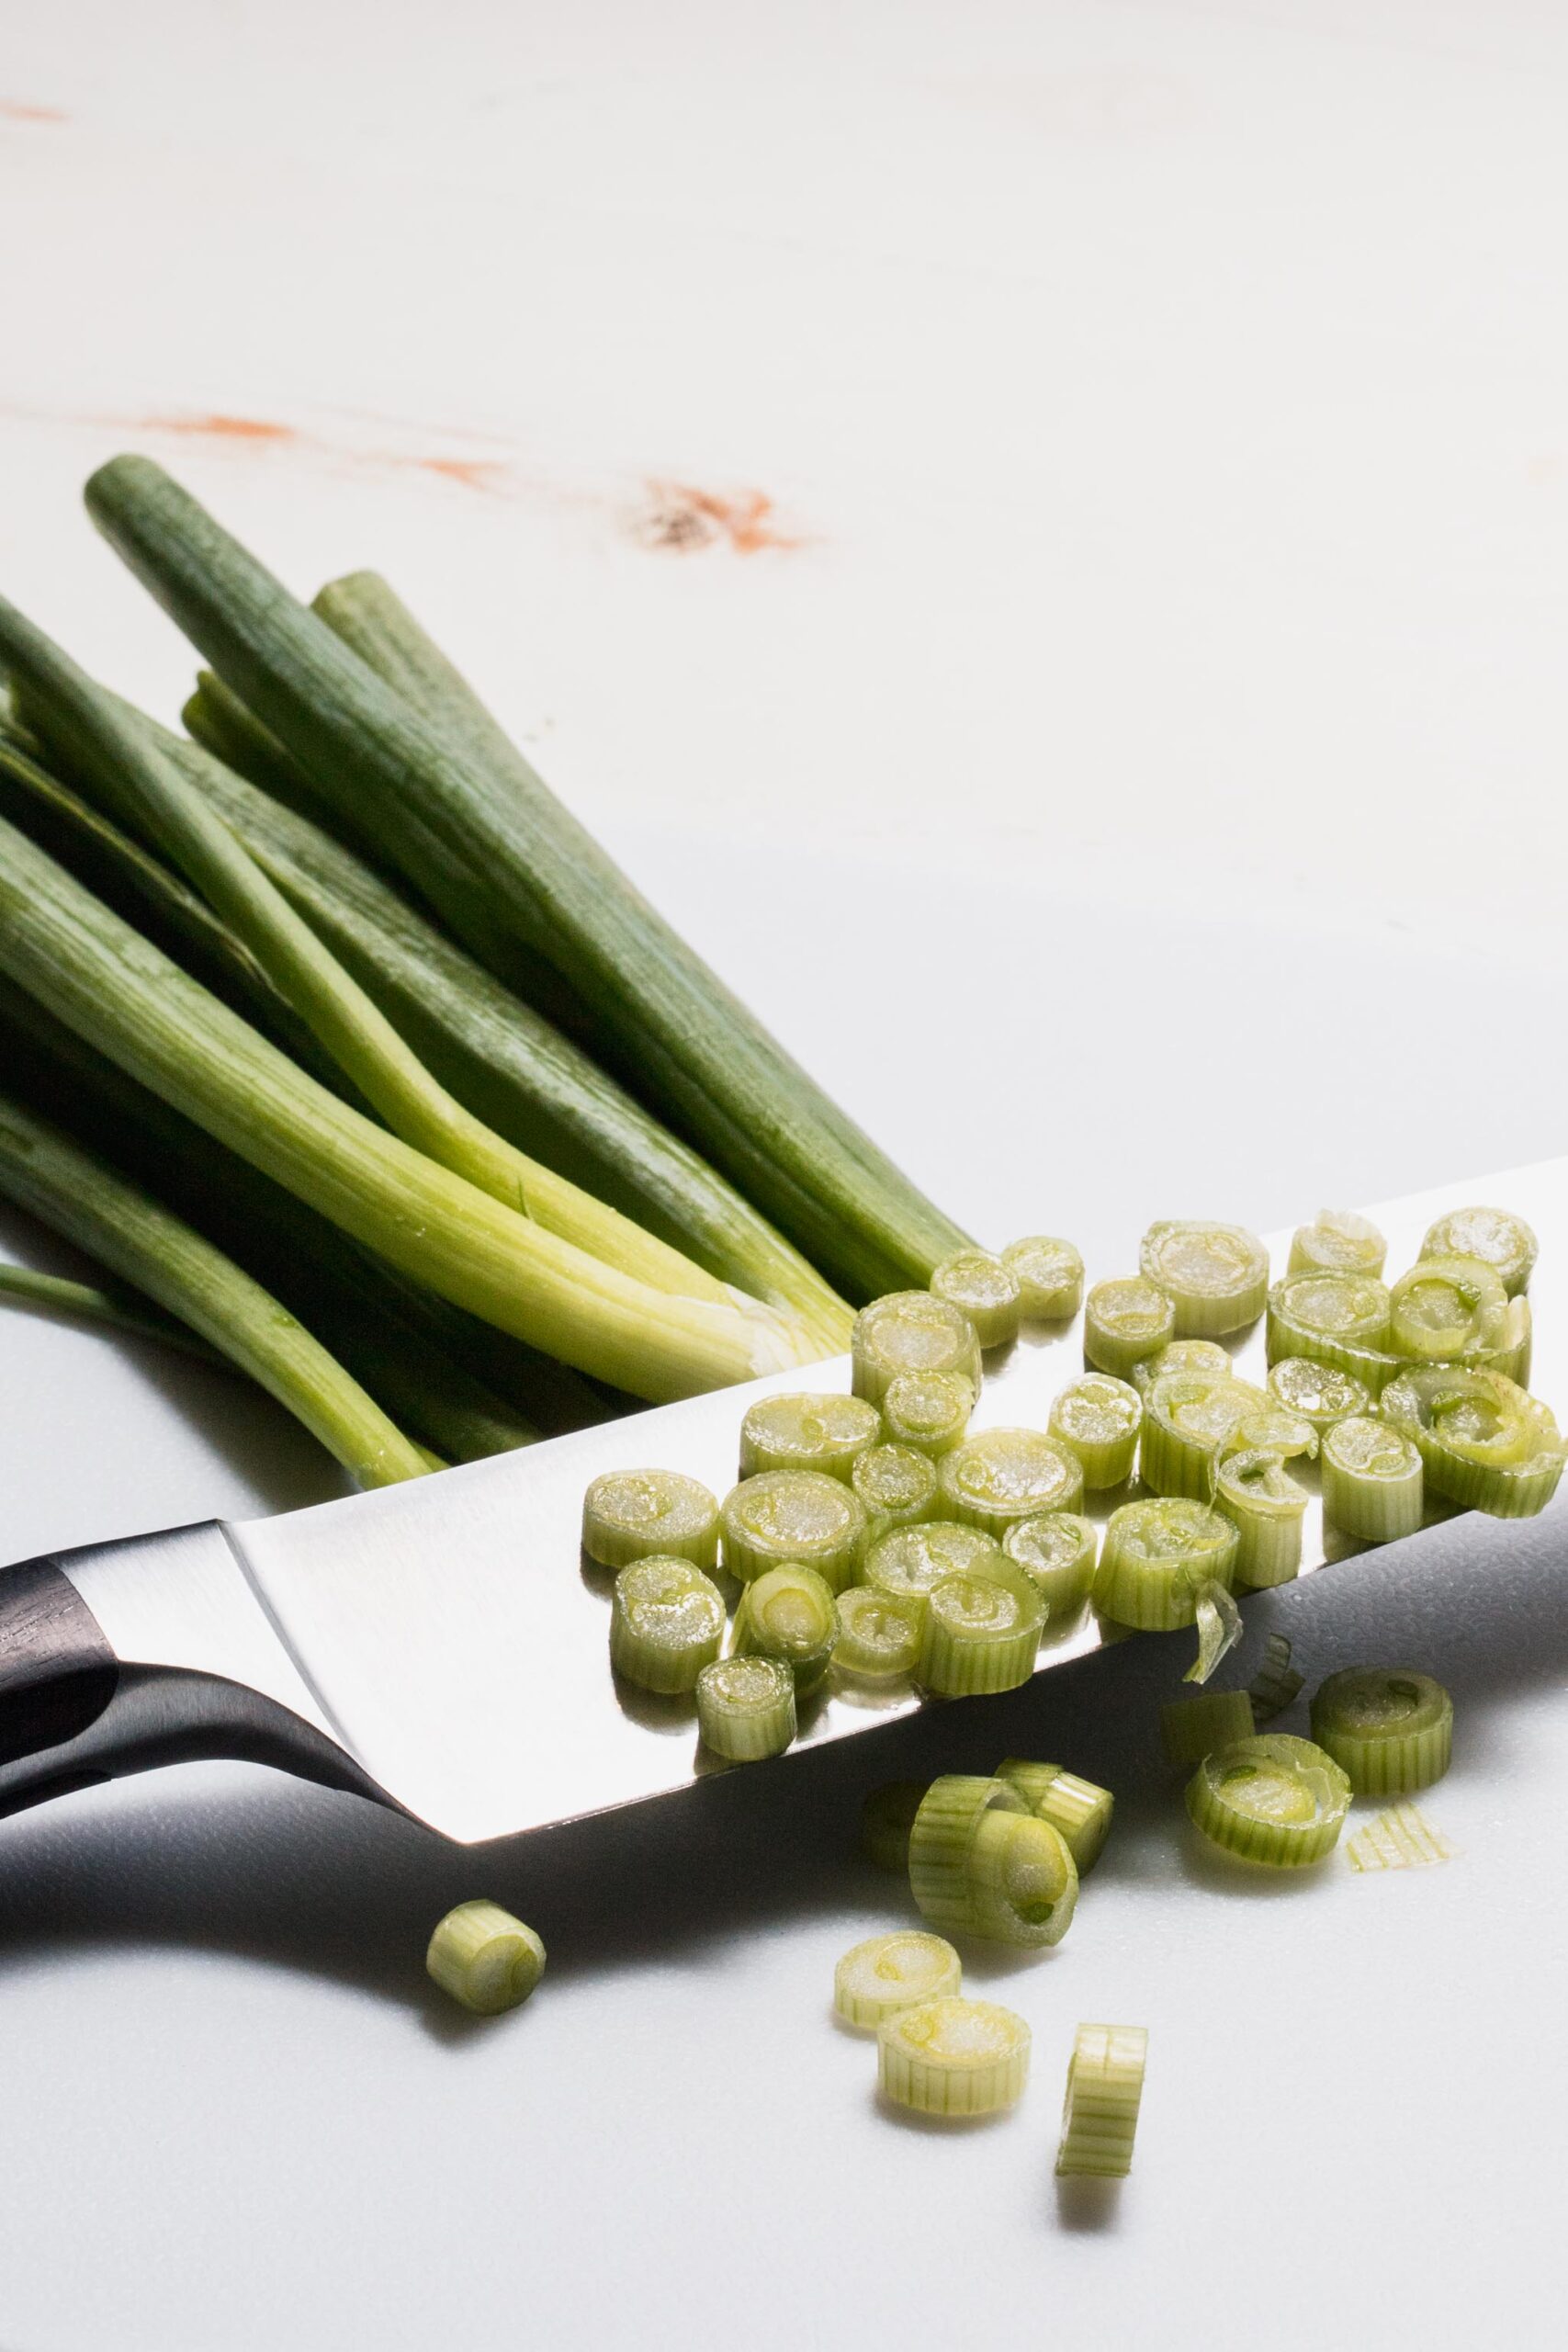 Knife cut through green onions to make circular cuts. 